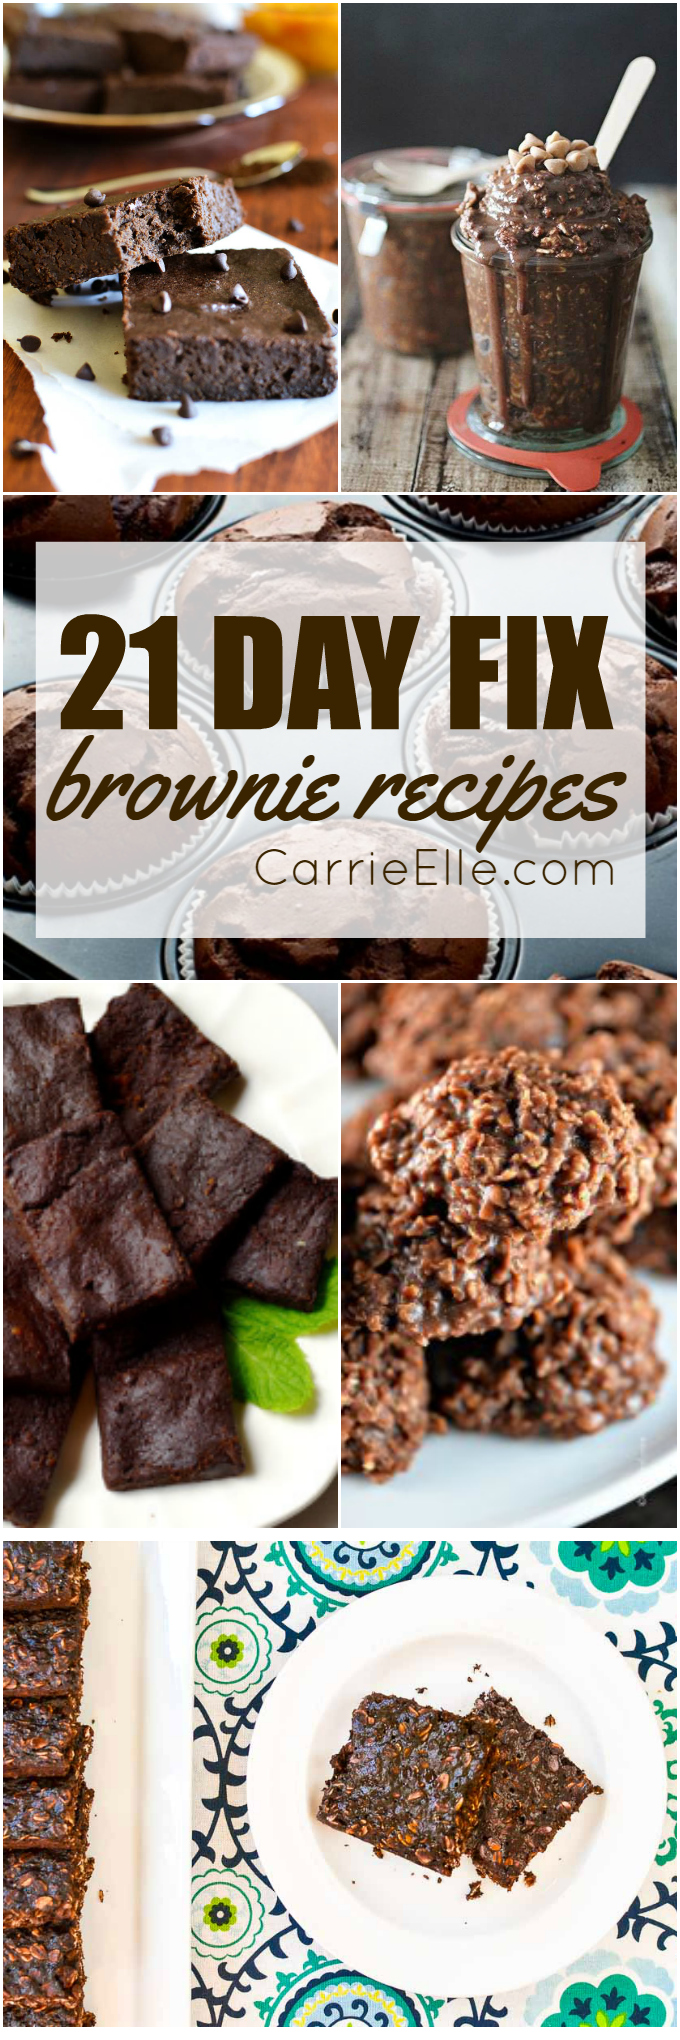 21 Day Fix Brownie Recipes